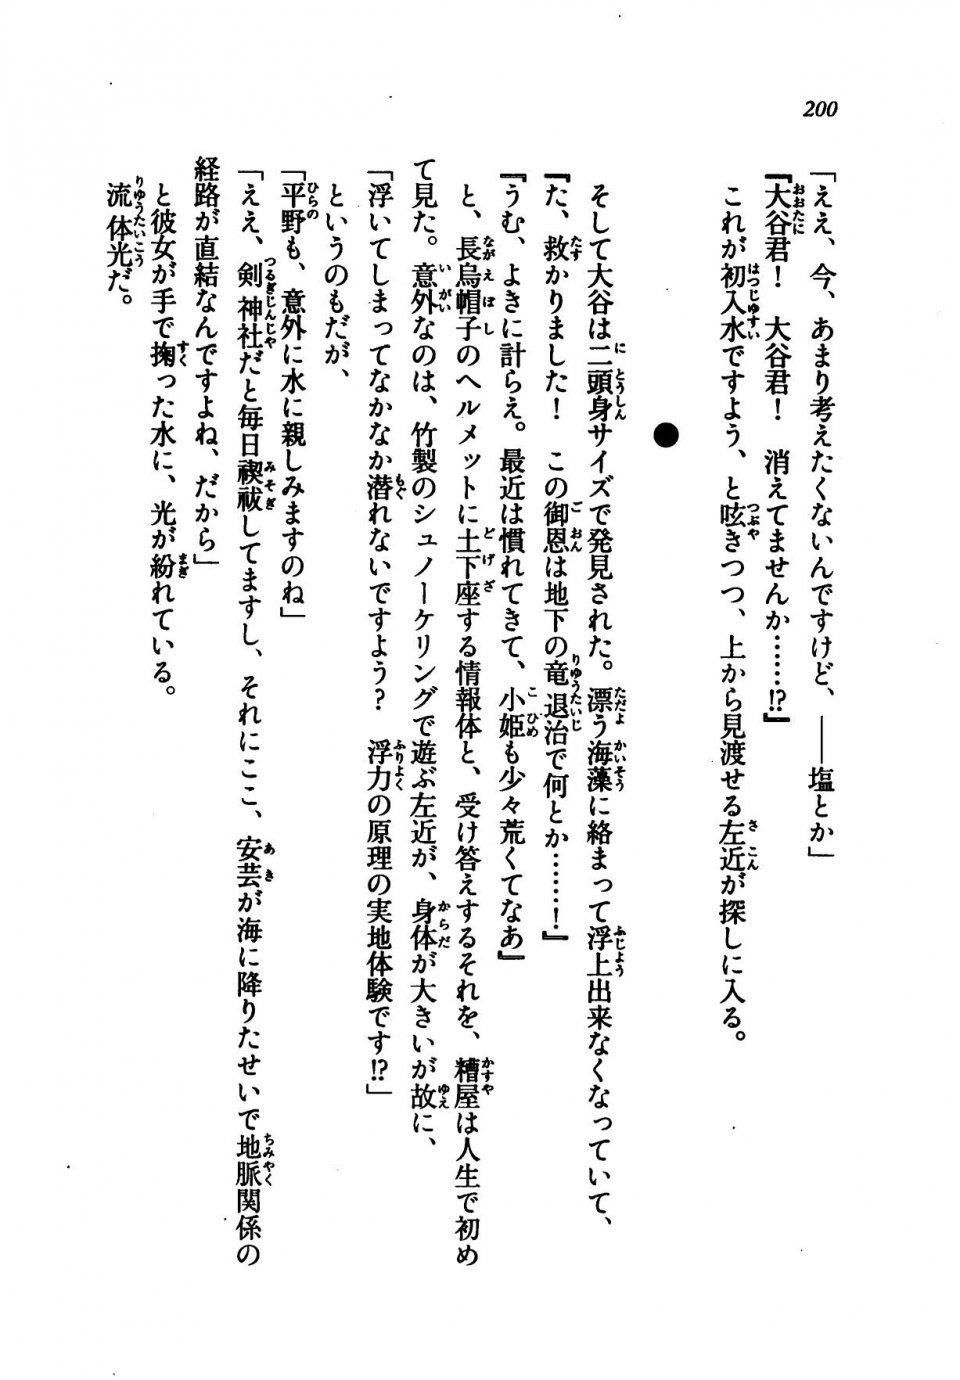 Kyoukai Senjou no Horizon LN Vol 21(8C) Part 1 - Photo #199